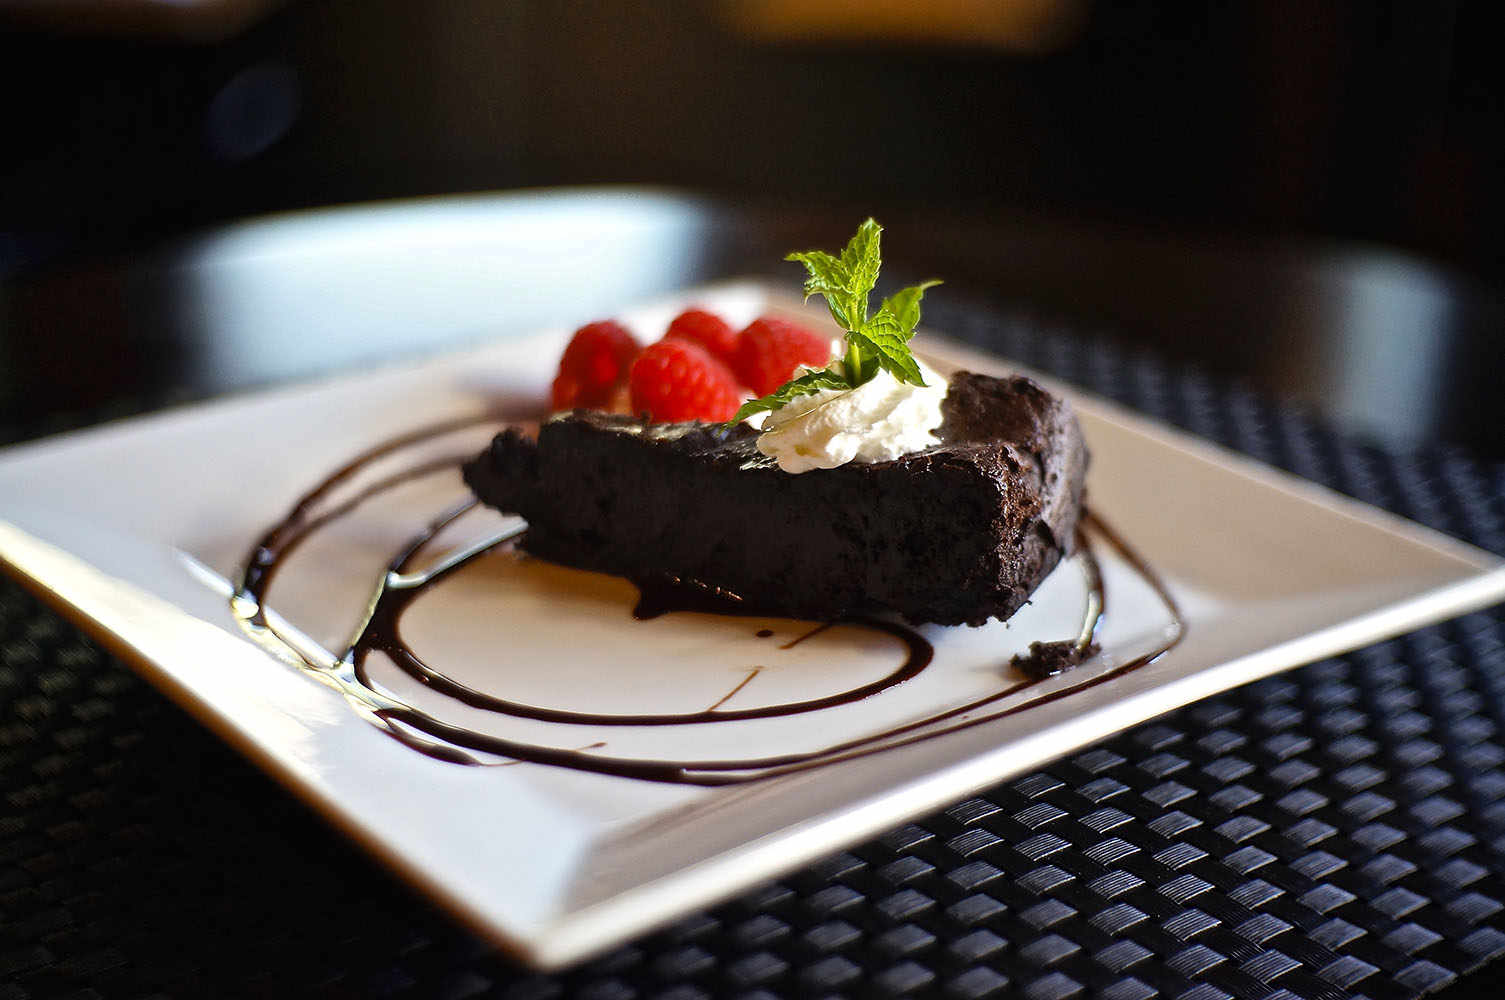 Eight Cuisine and Wine dessert menu chocolate cake with raspberries